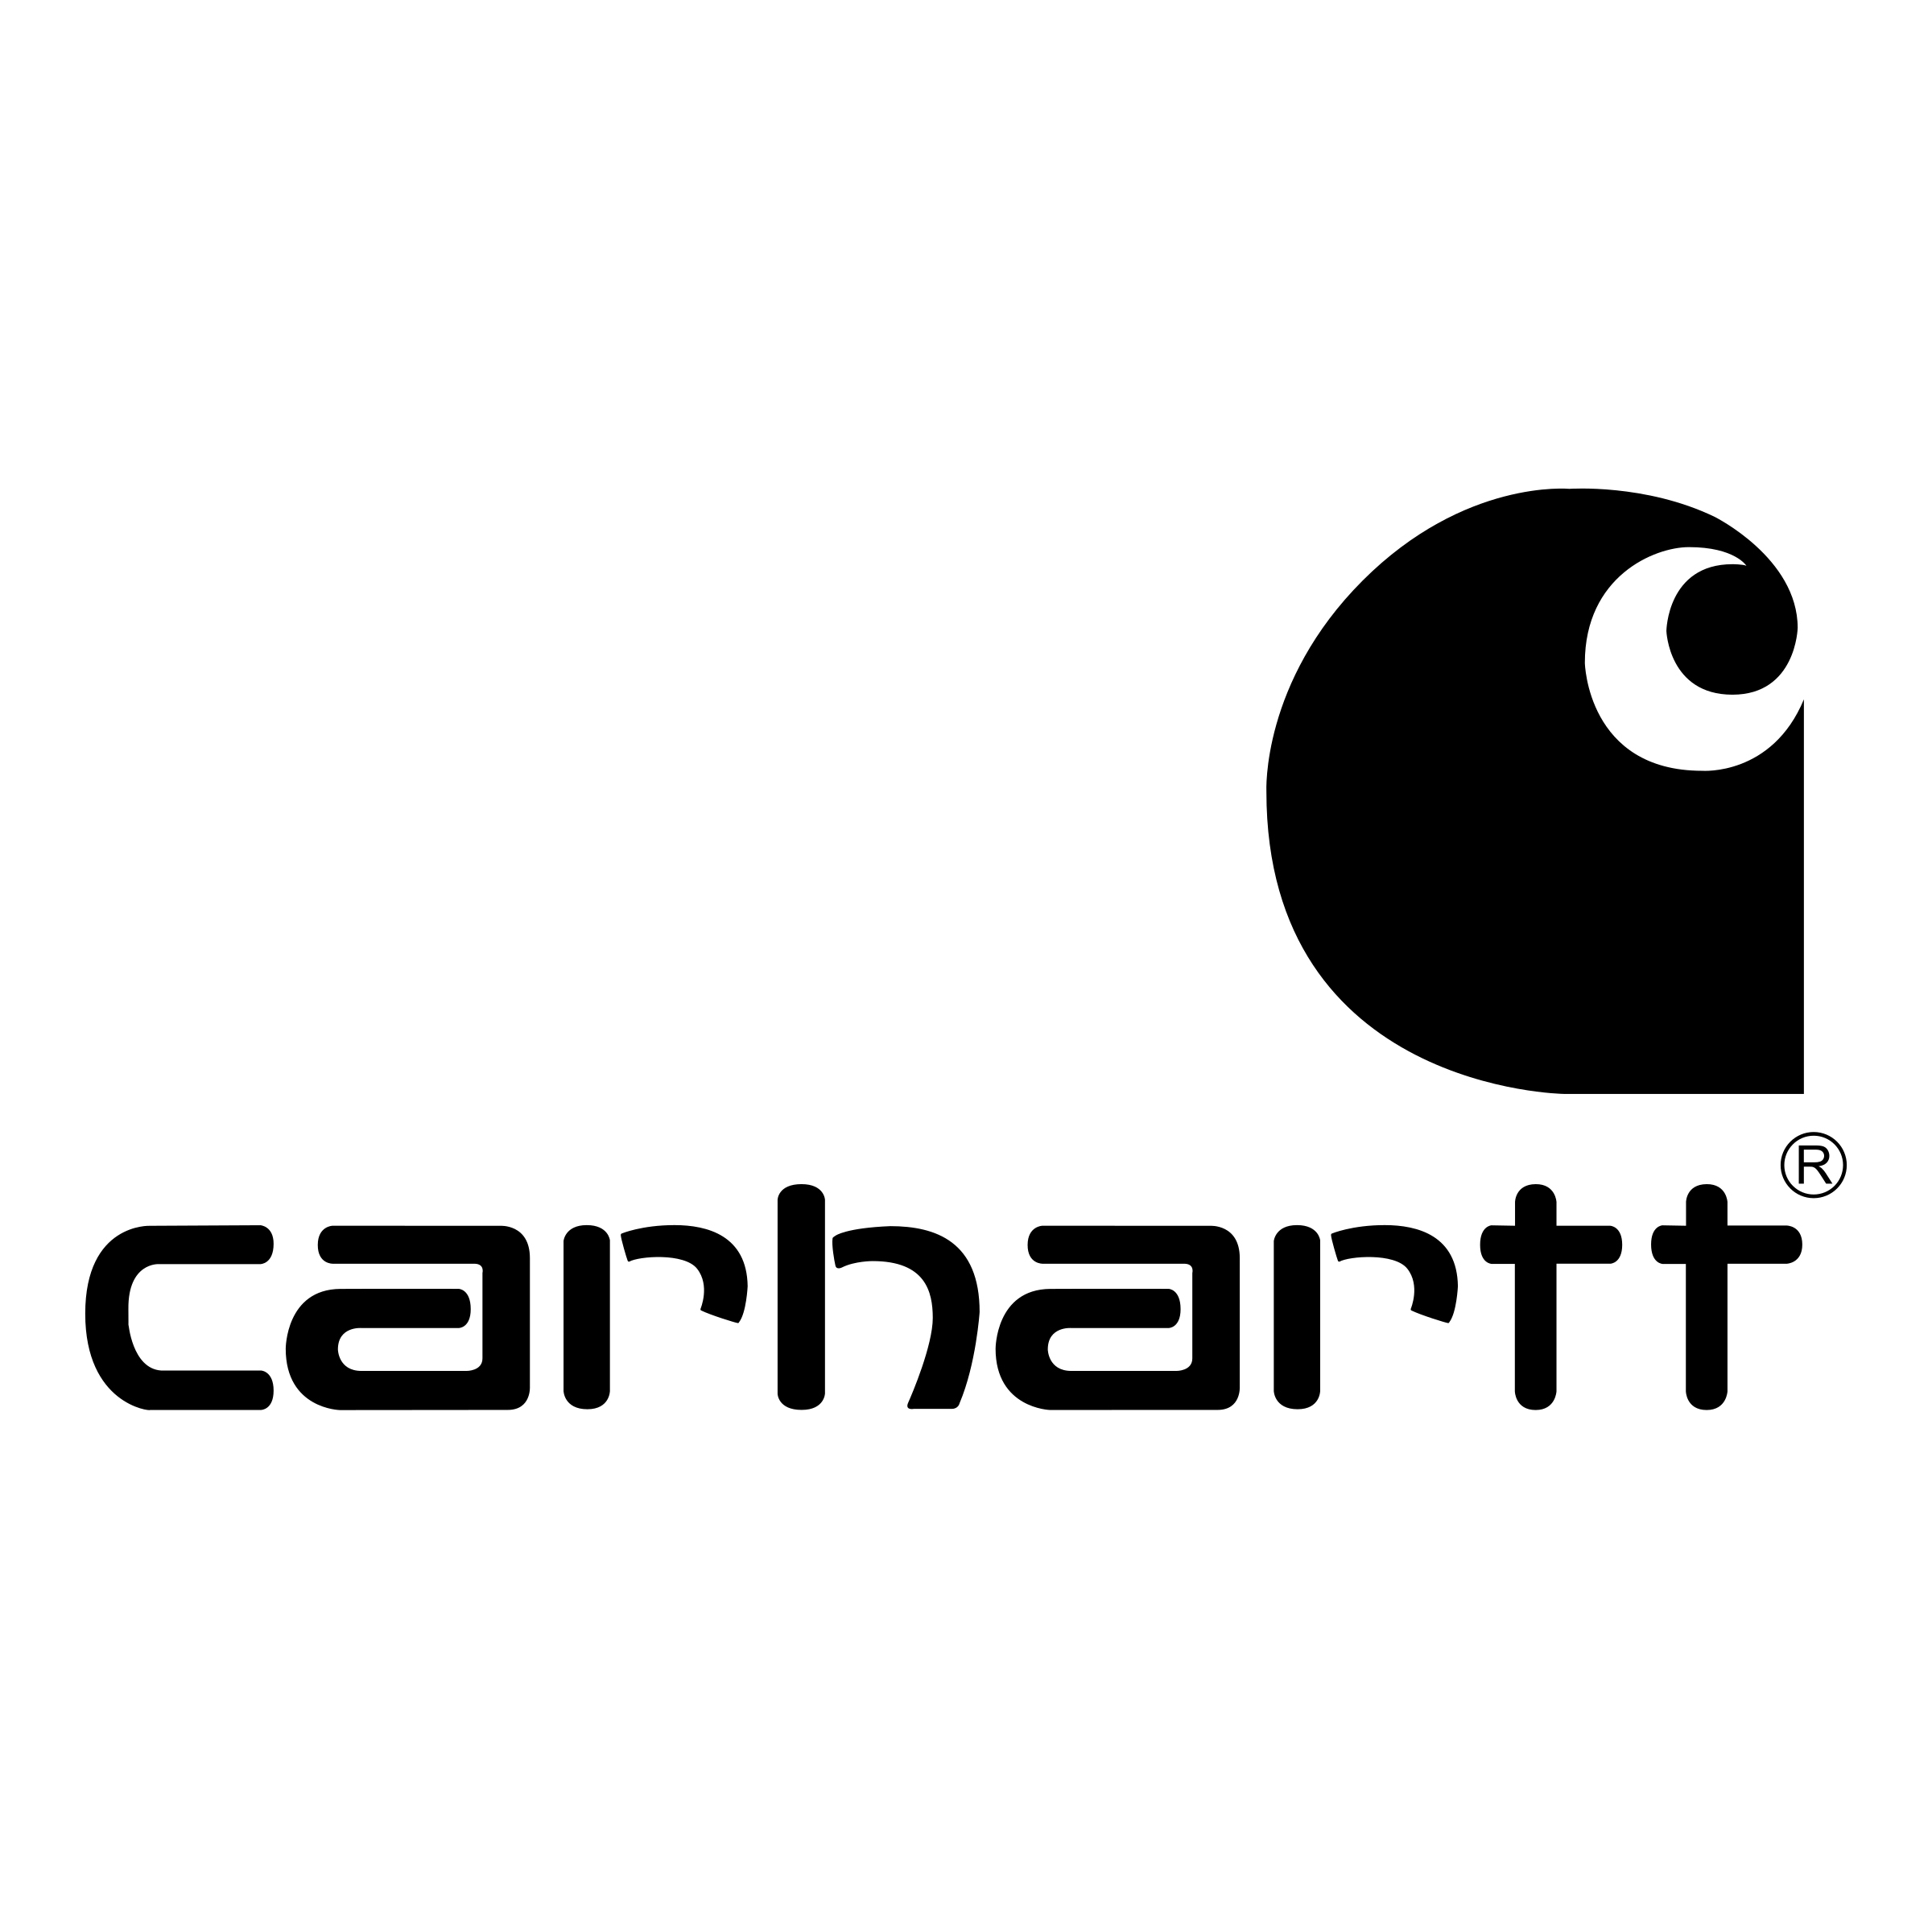 Carrhart Logo - Carhartt Logo PNG Transparent & SVG Vector - Freebie Supply